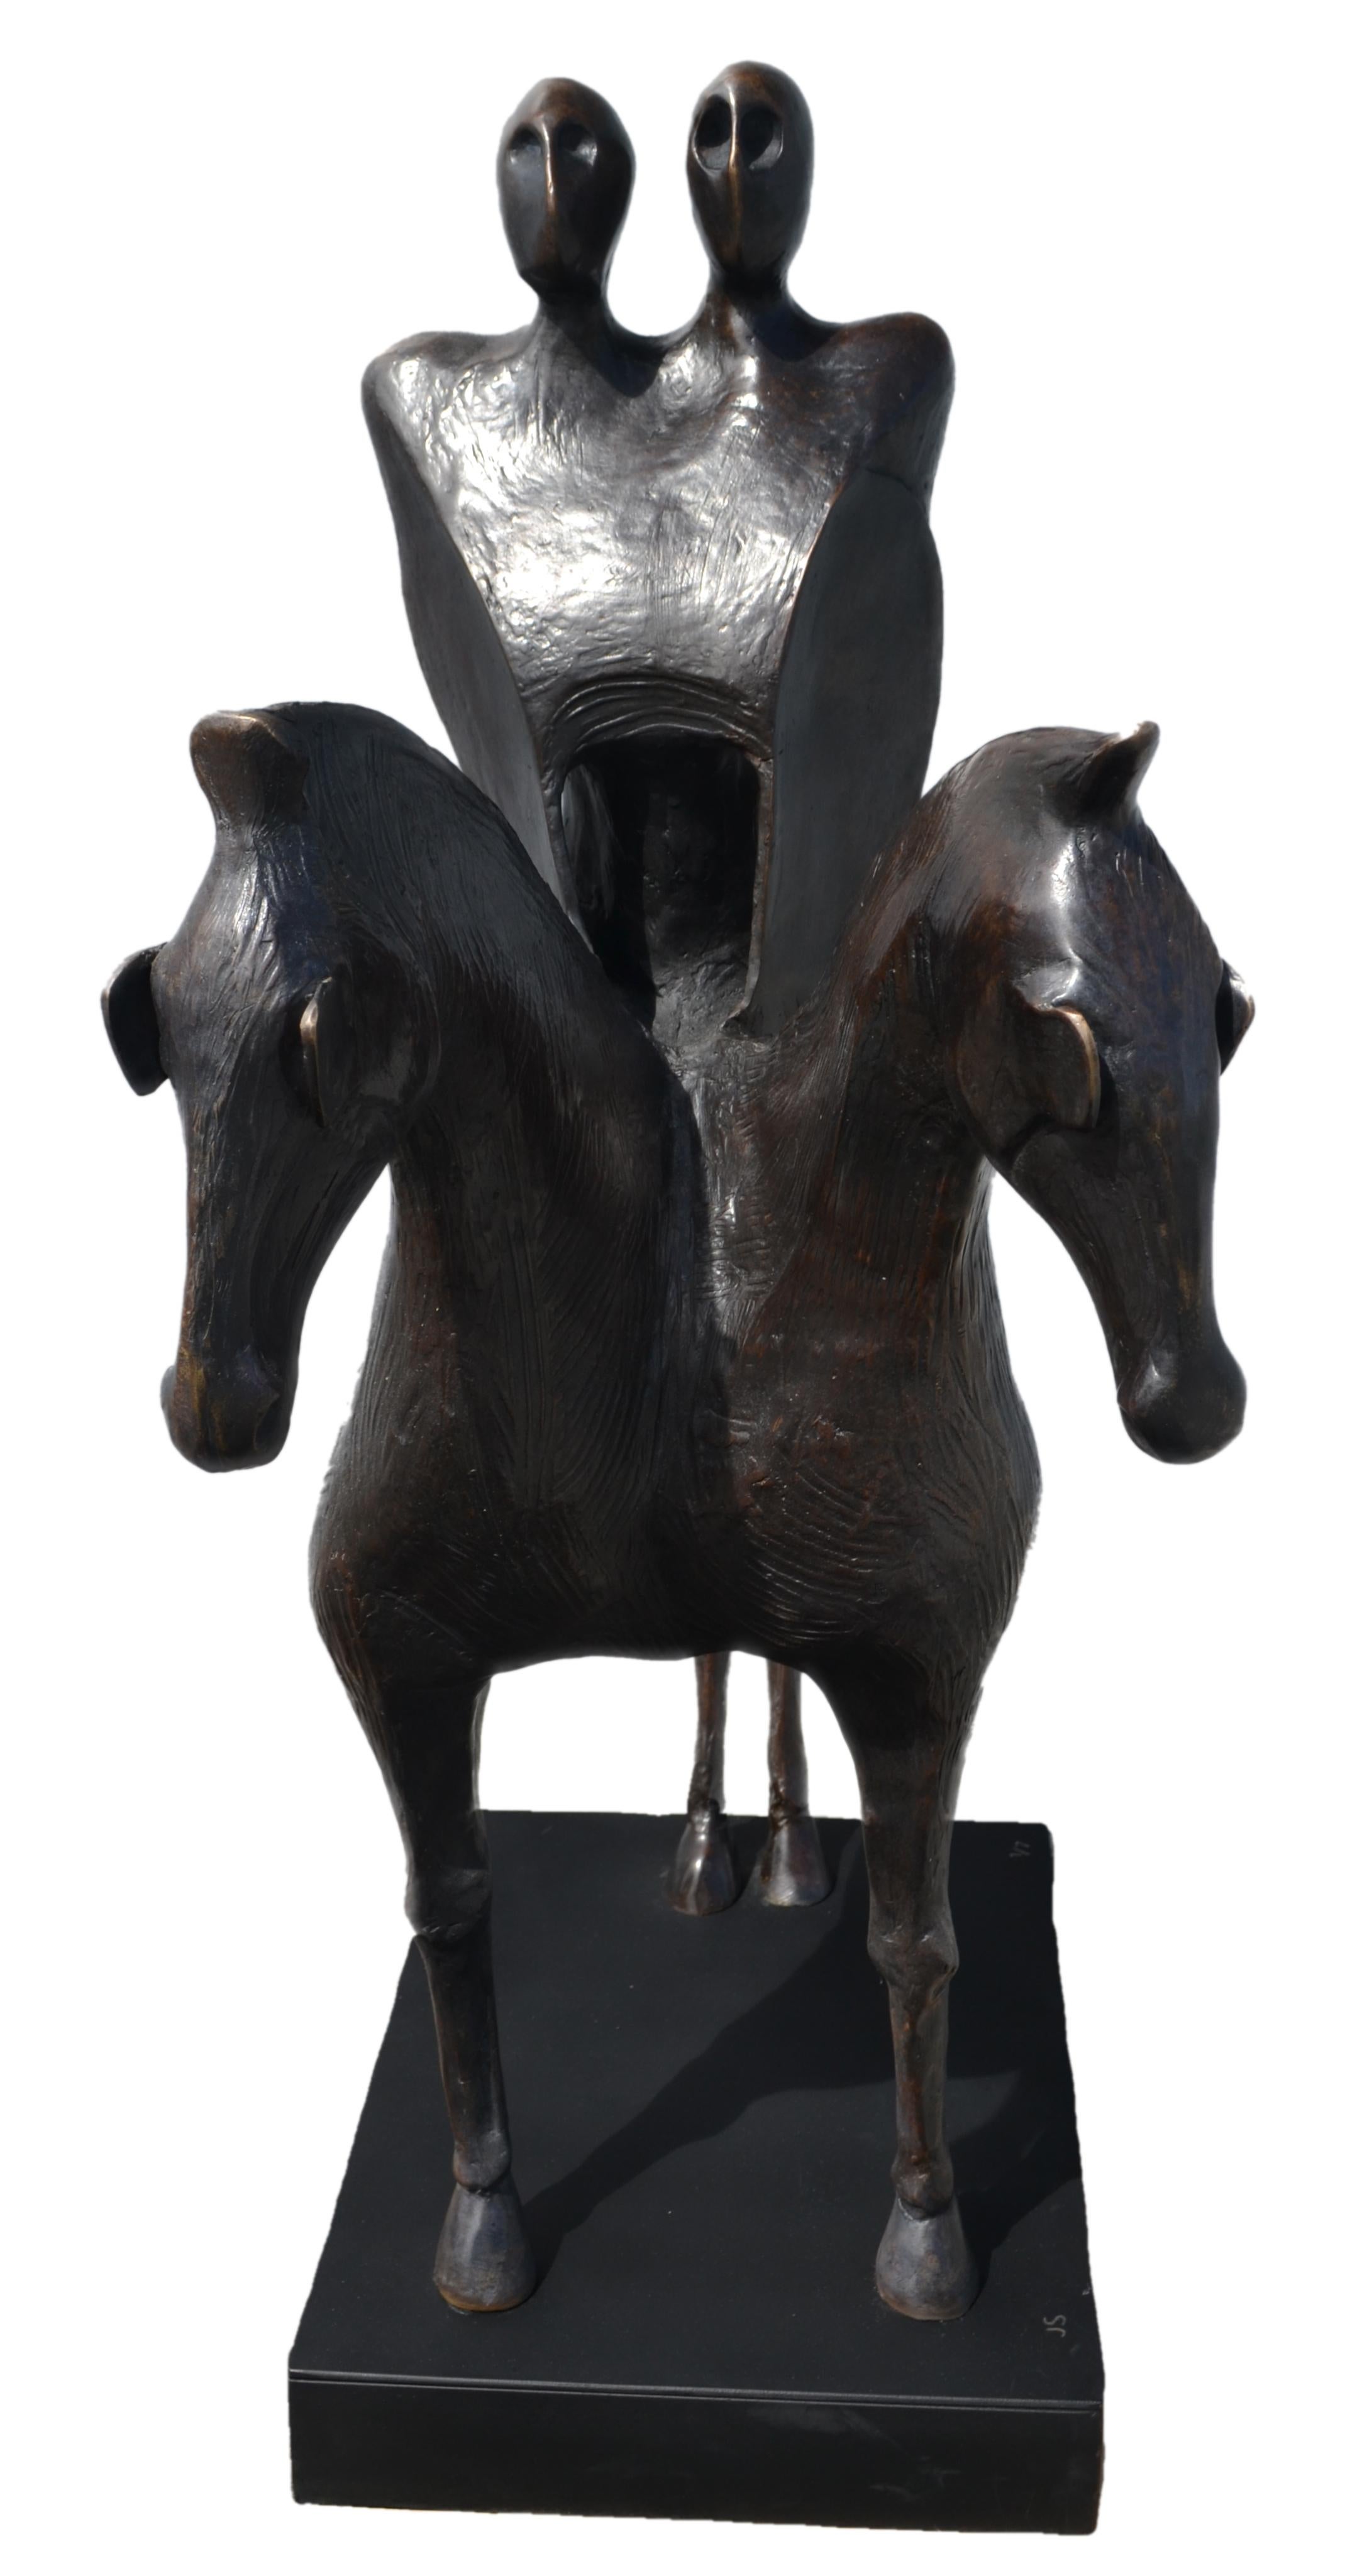 Jorge Segu, Falsos Heroes en Caballos Mticos, bronze, édition 1/7, 2010-2013 - Contemporain Sculpture par Jorge Seguí 